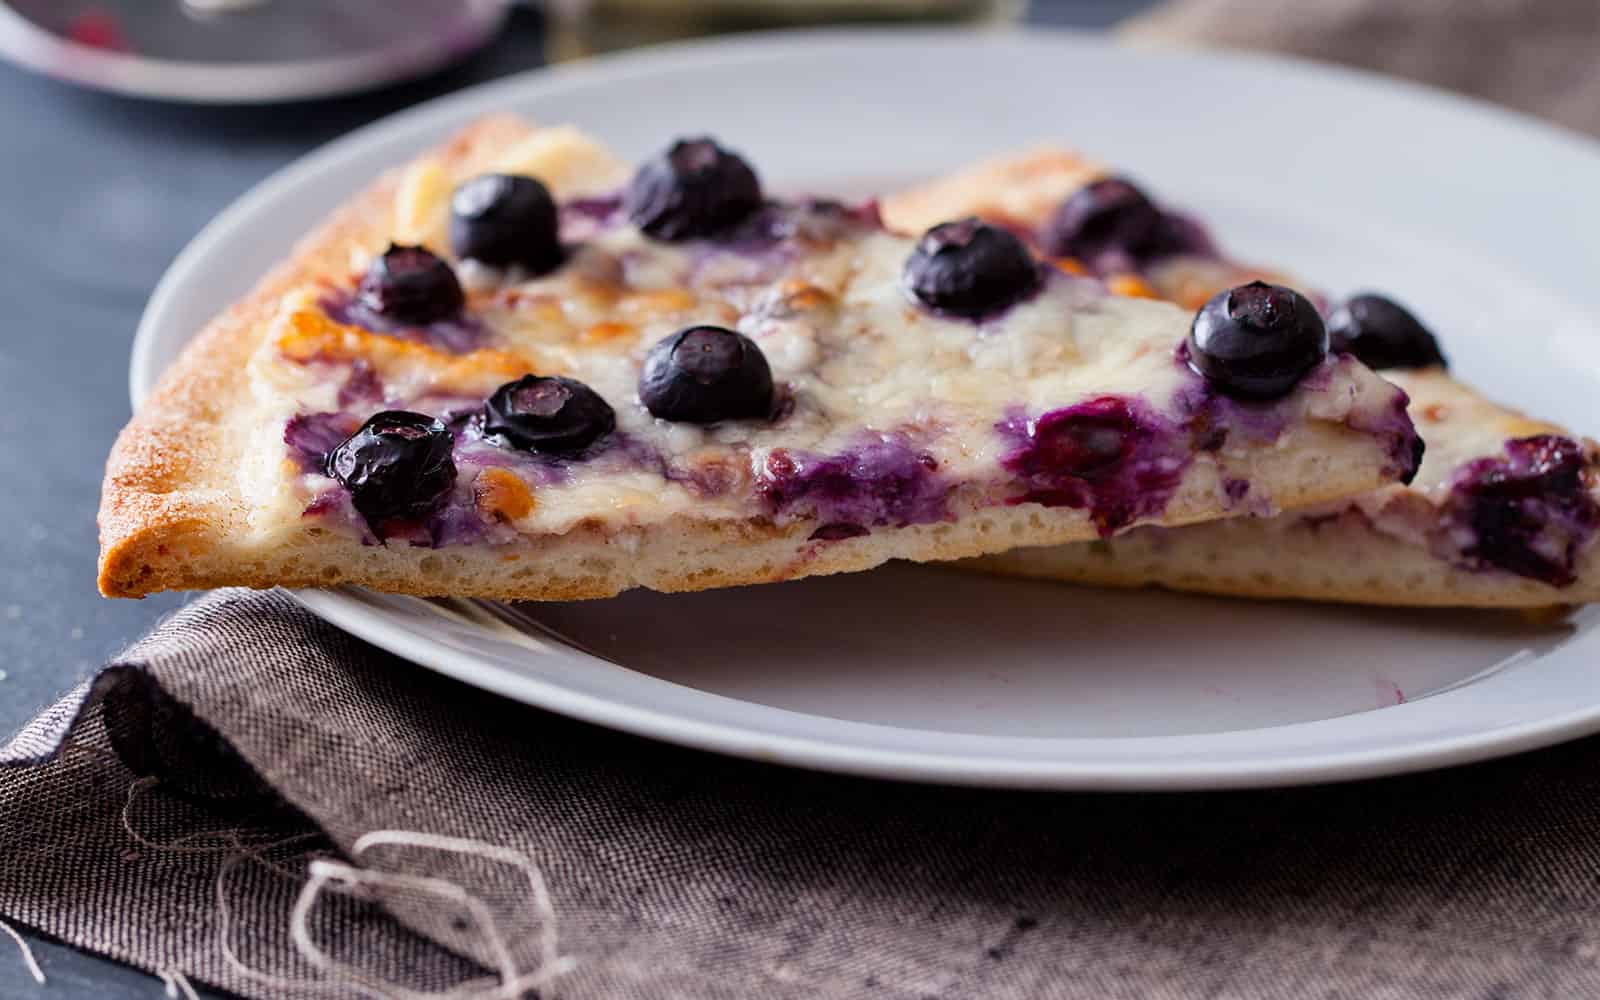 Blueberry cheese dessert pizza